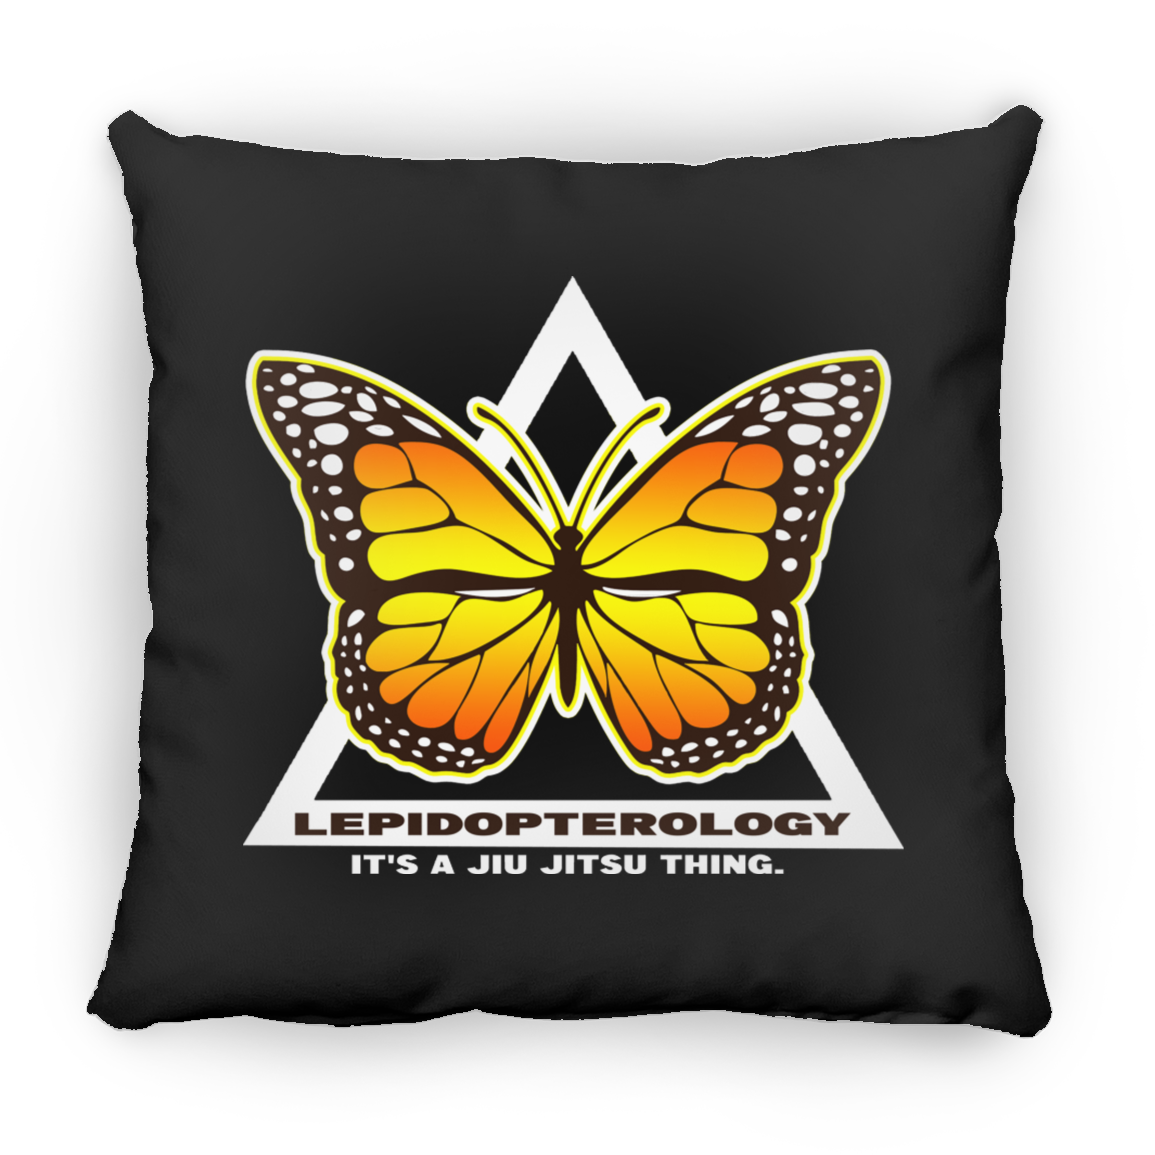 Artichoke Fight Gear Custom Design #6. Lepidopterology (Study of butterflies). Butterfly Guard. Large Square Pillow